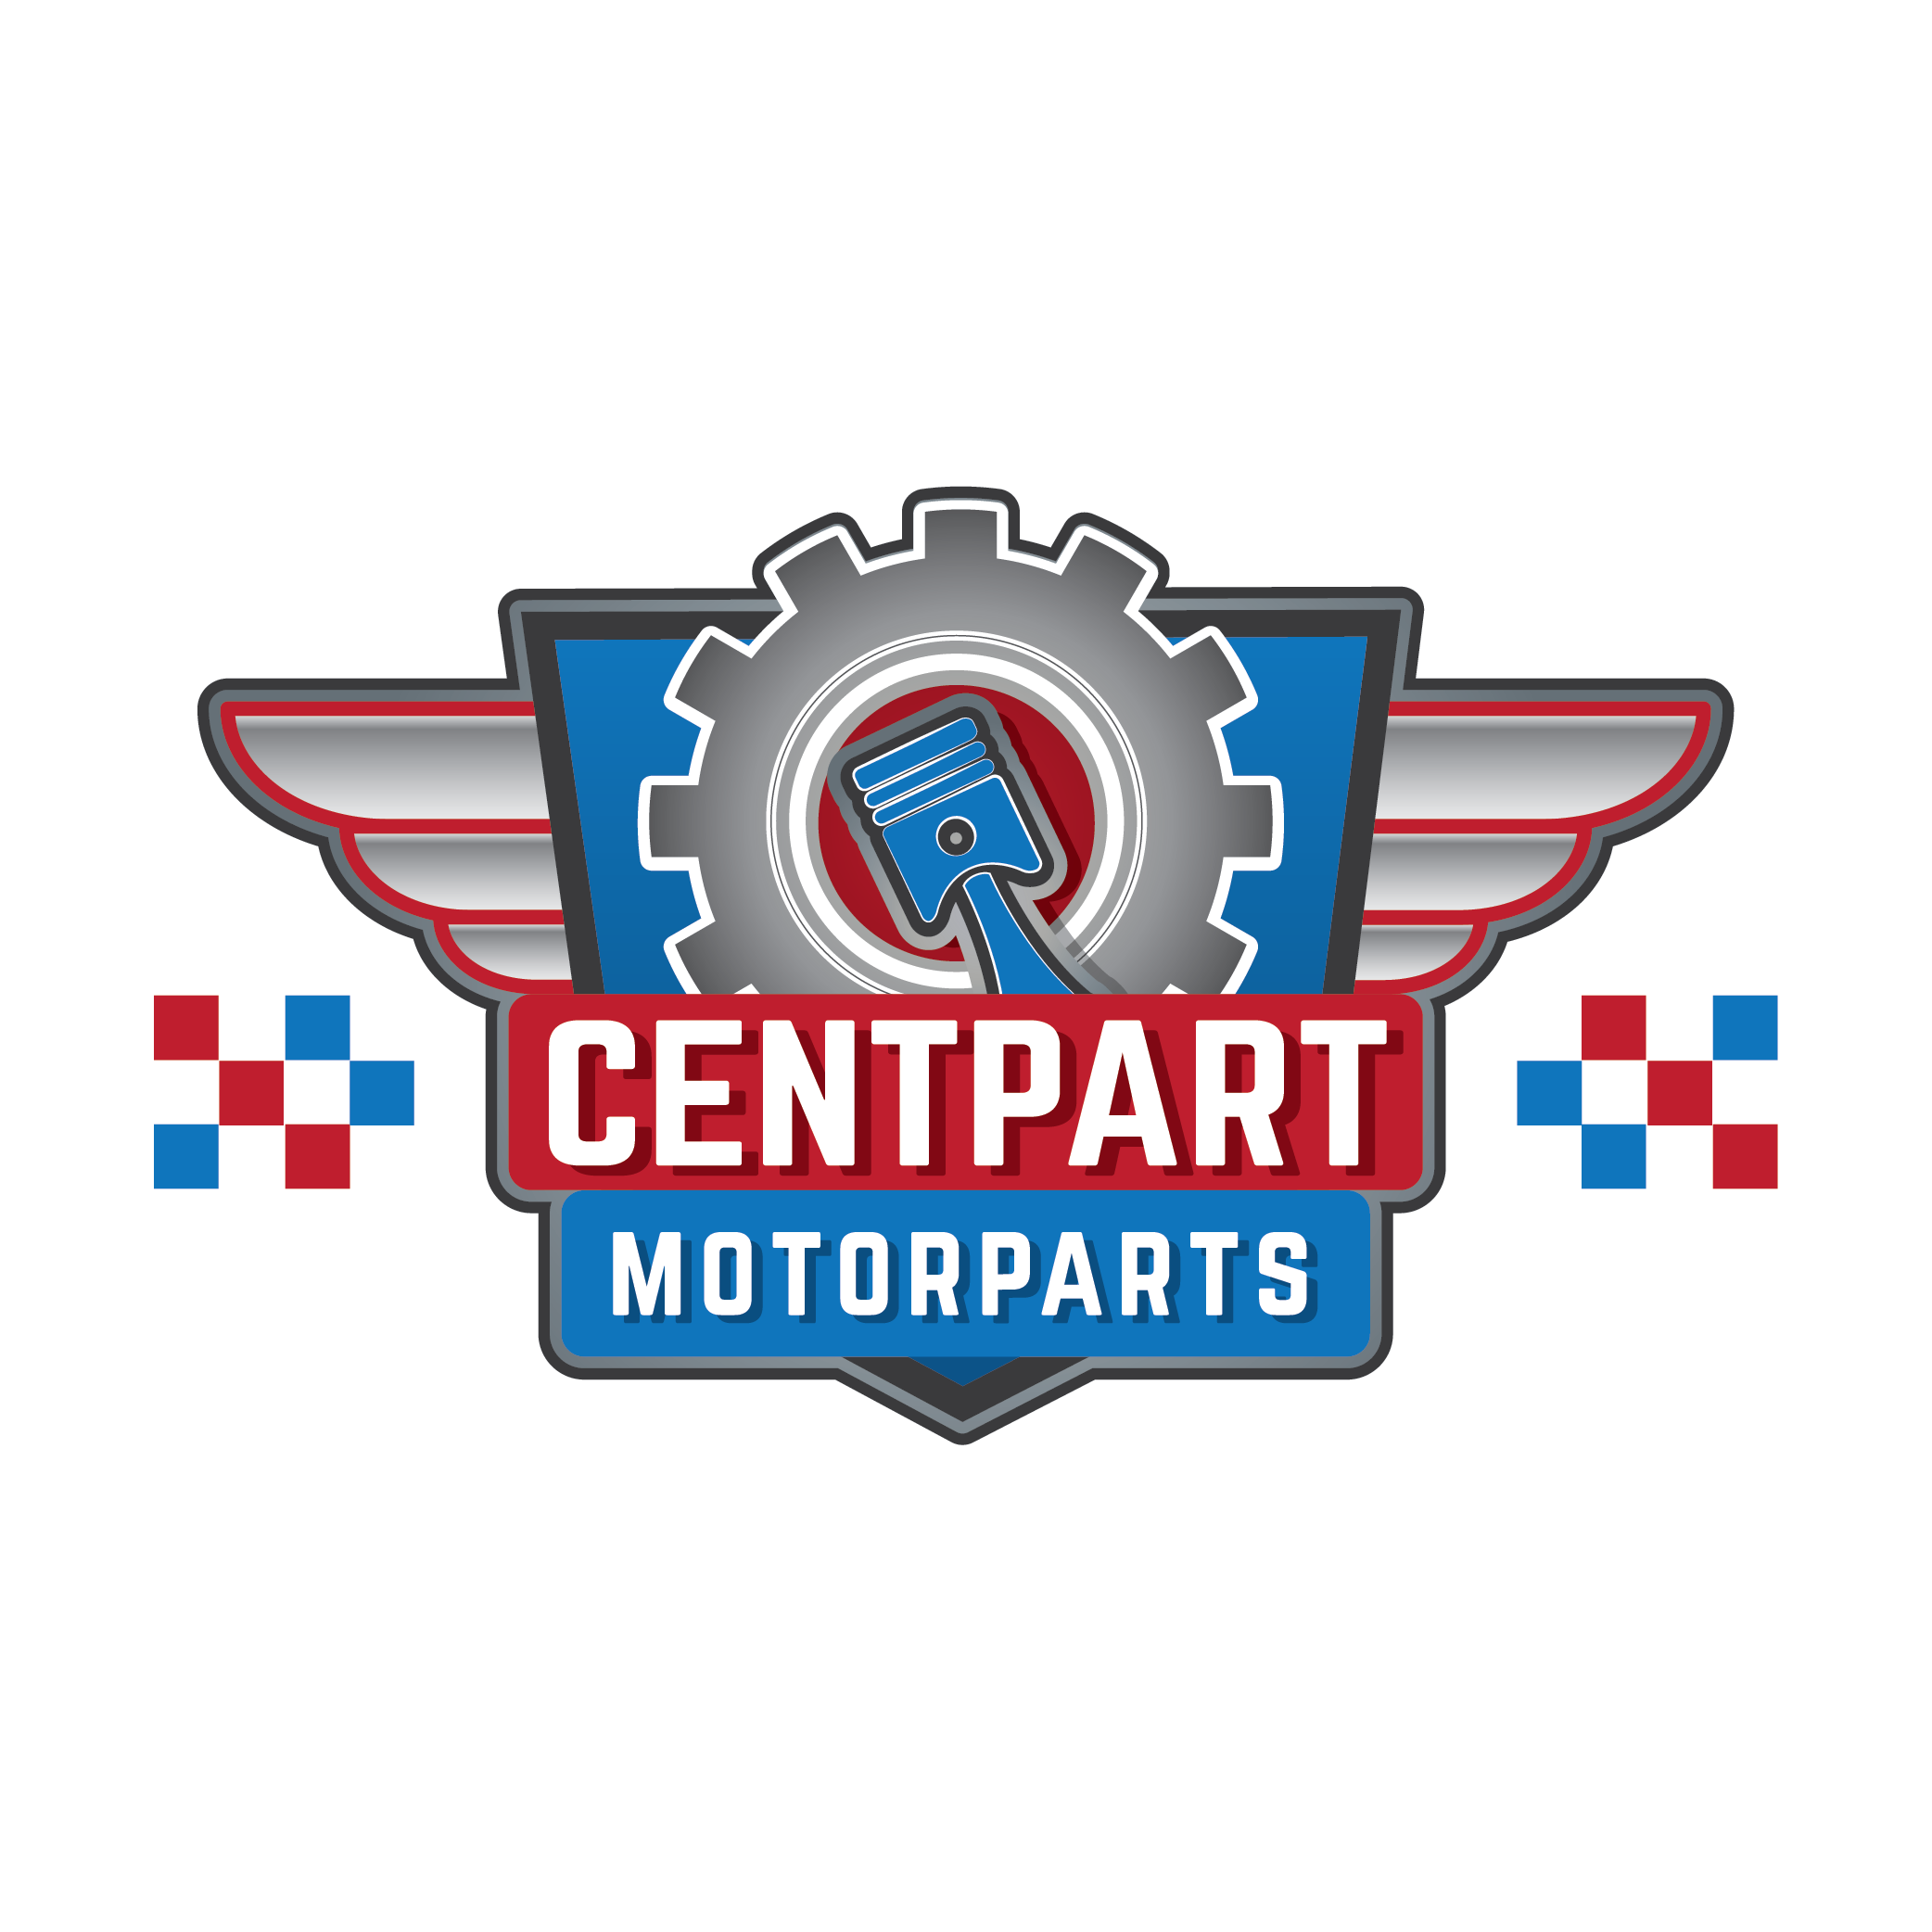 CentPart Motorparts